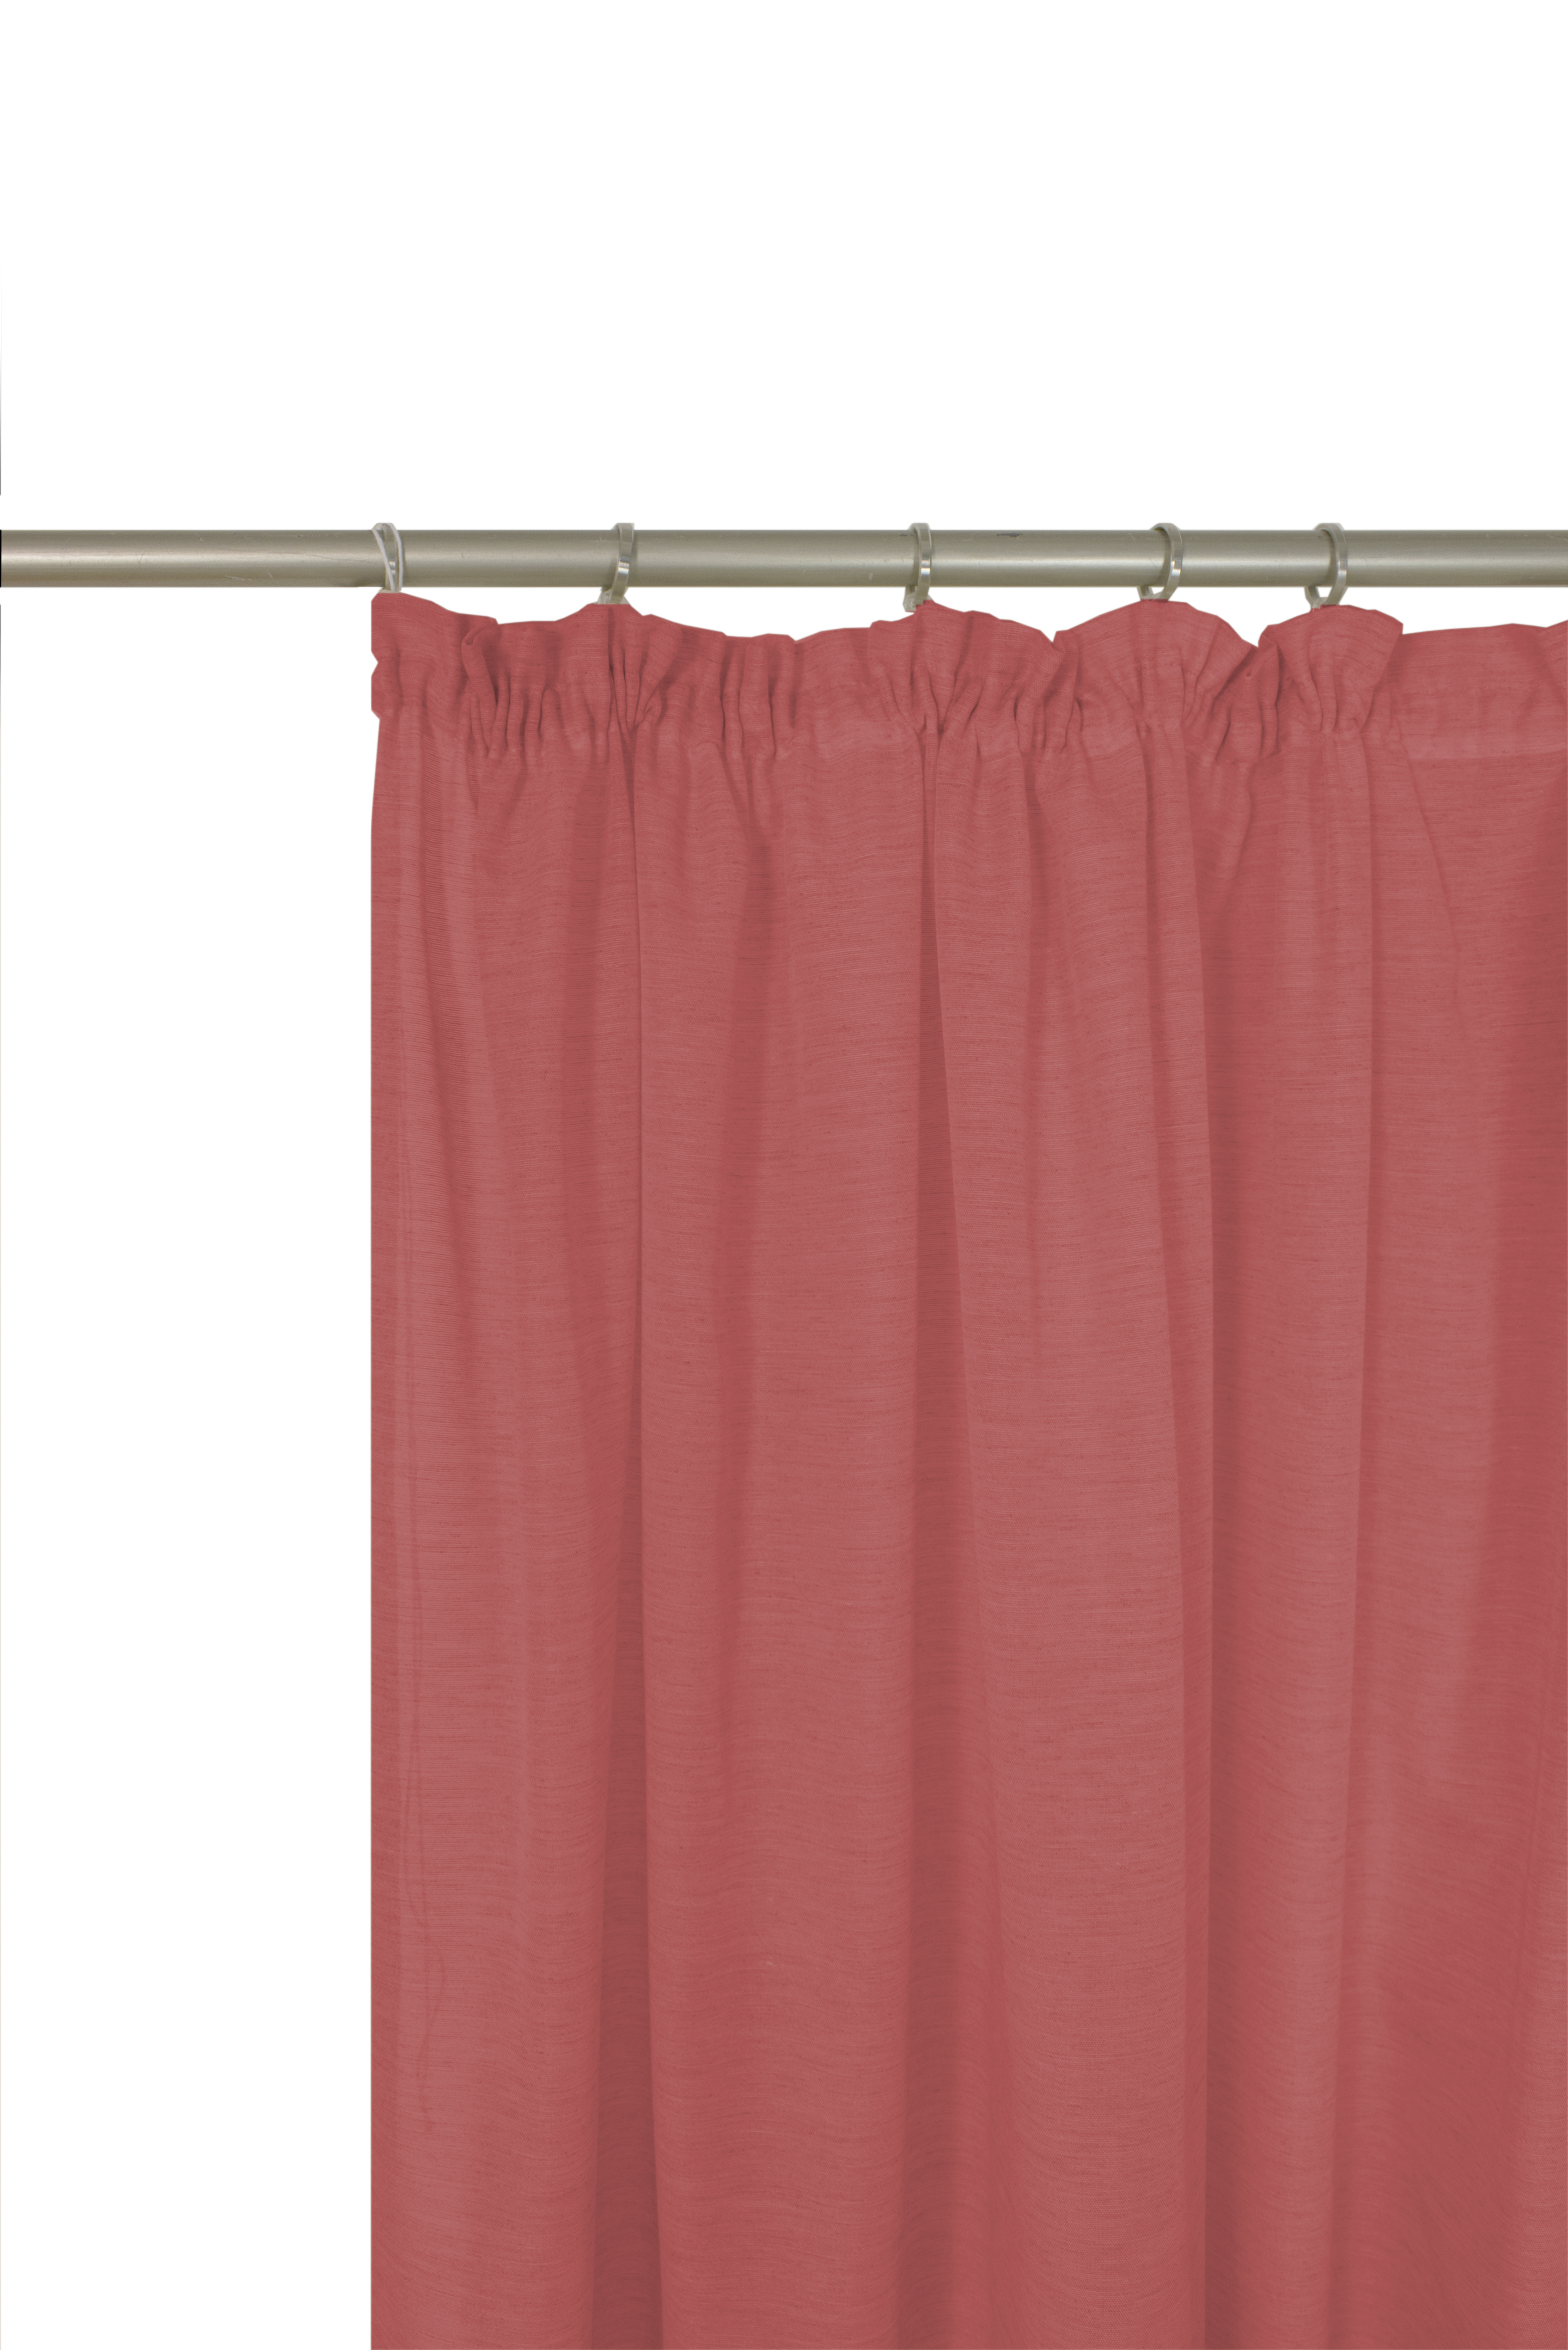 Lorca (Vorhang) - Farbe: Rot | Größe: 245 x 142 cm | Aufmachung: Kräuselband